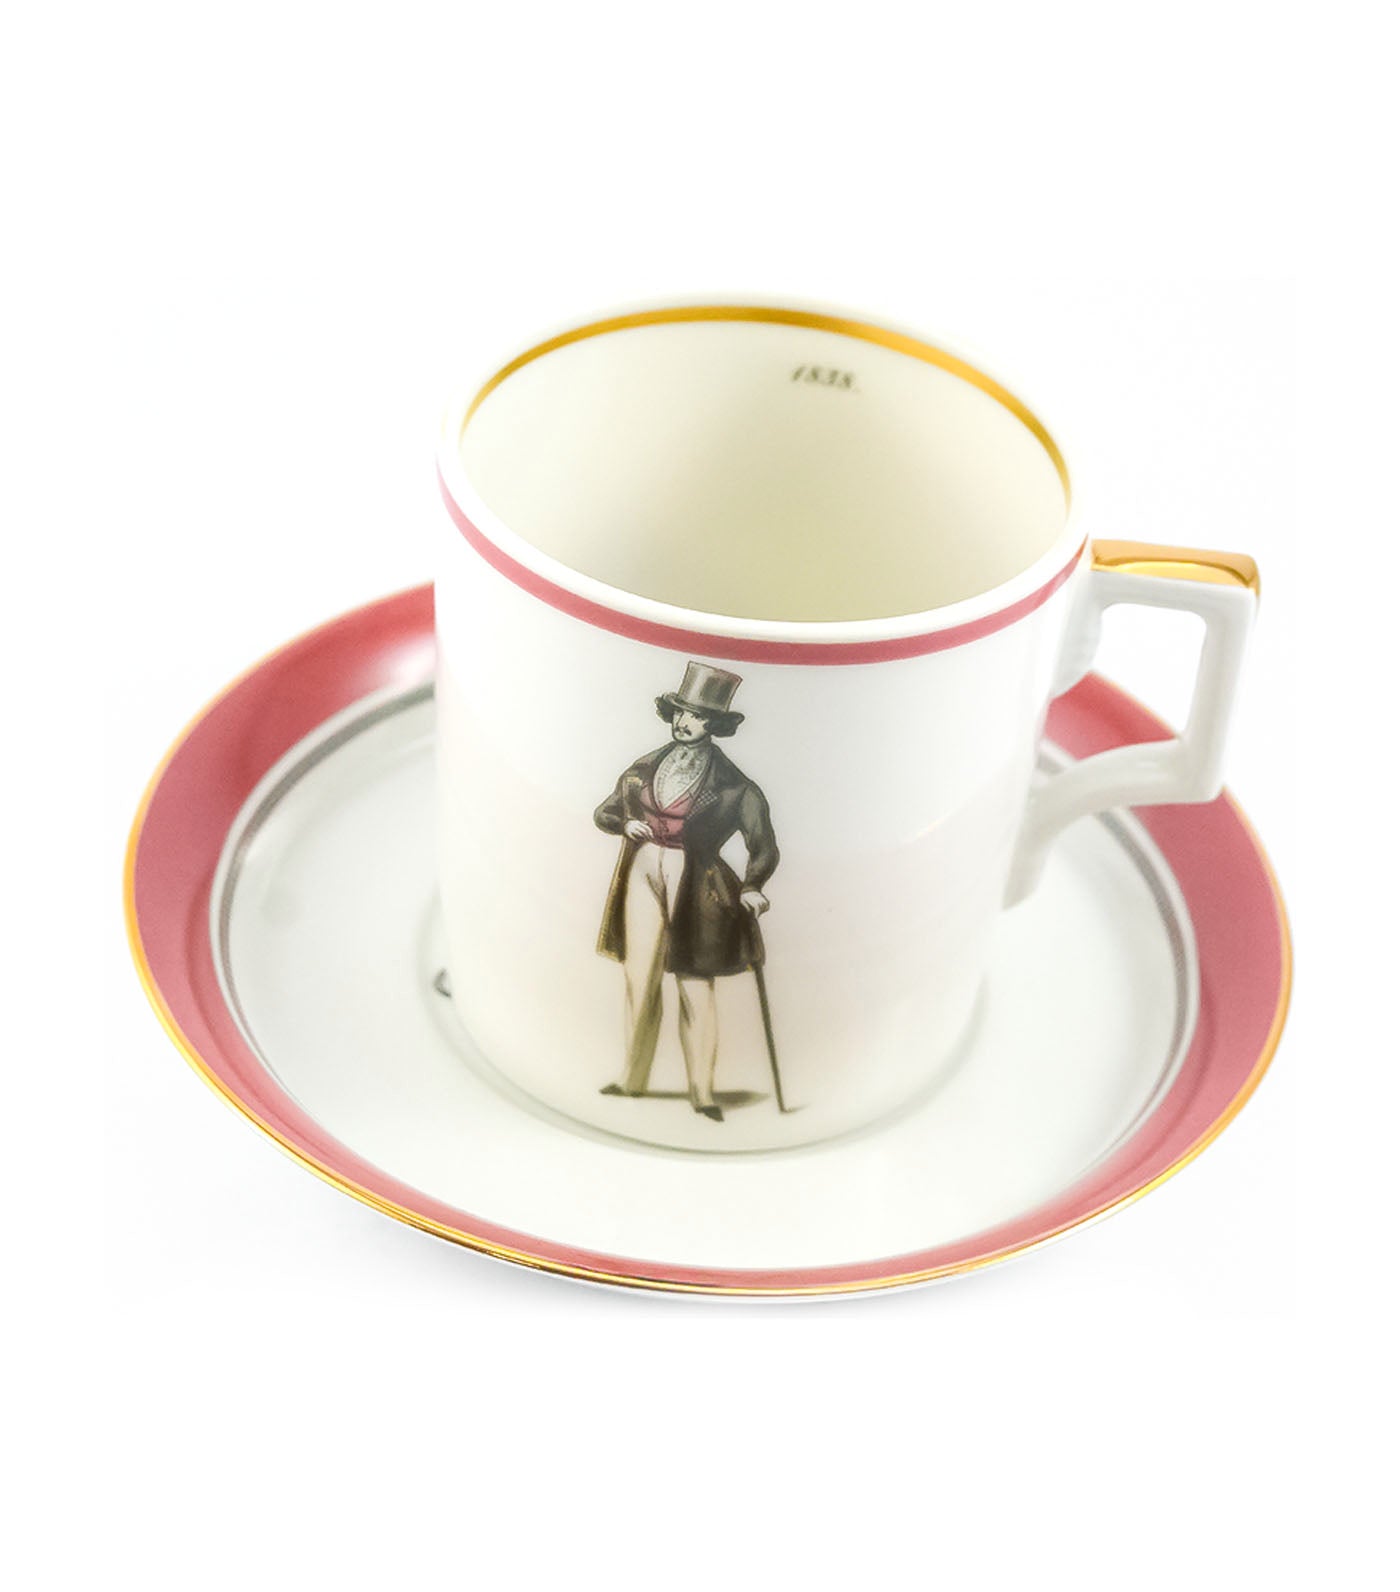 imperial porcelain modes de paris 1838 teacup and saucer heraldic